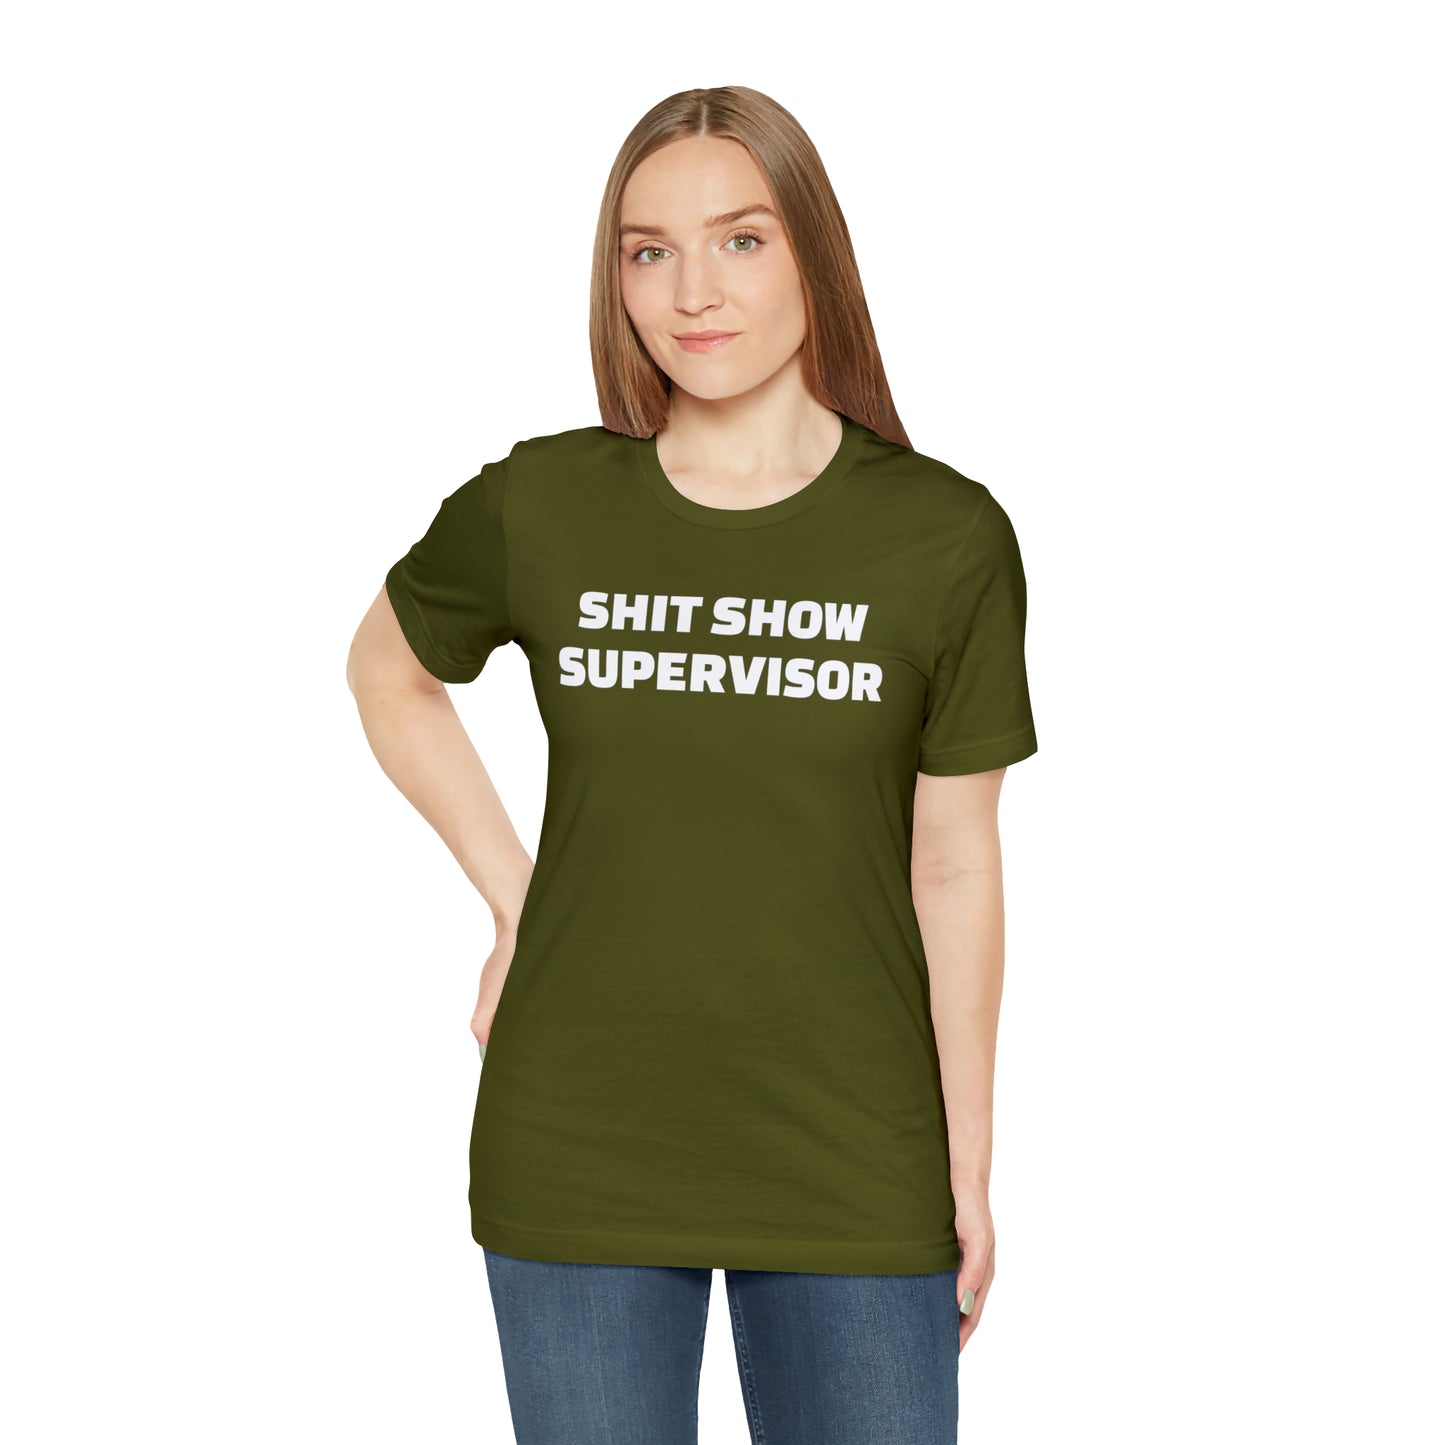 Shit Show Supervisor Funny T-Shirt